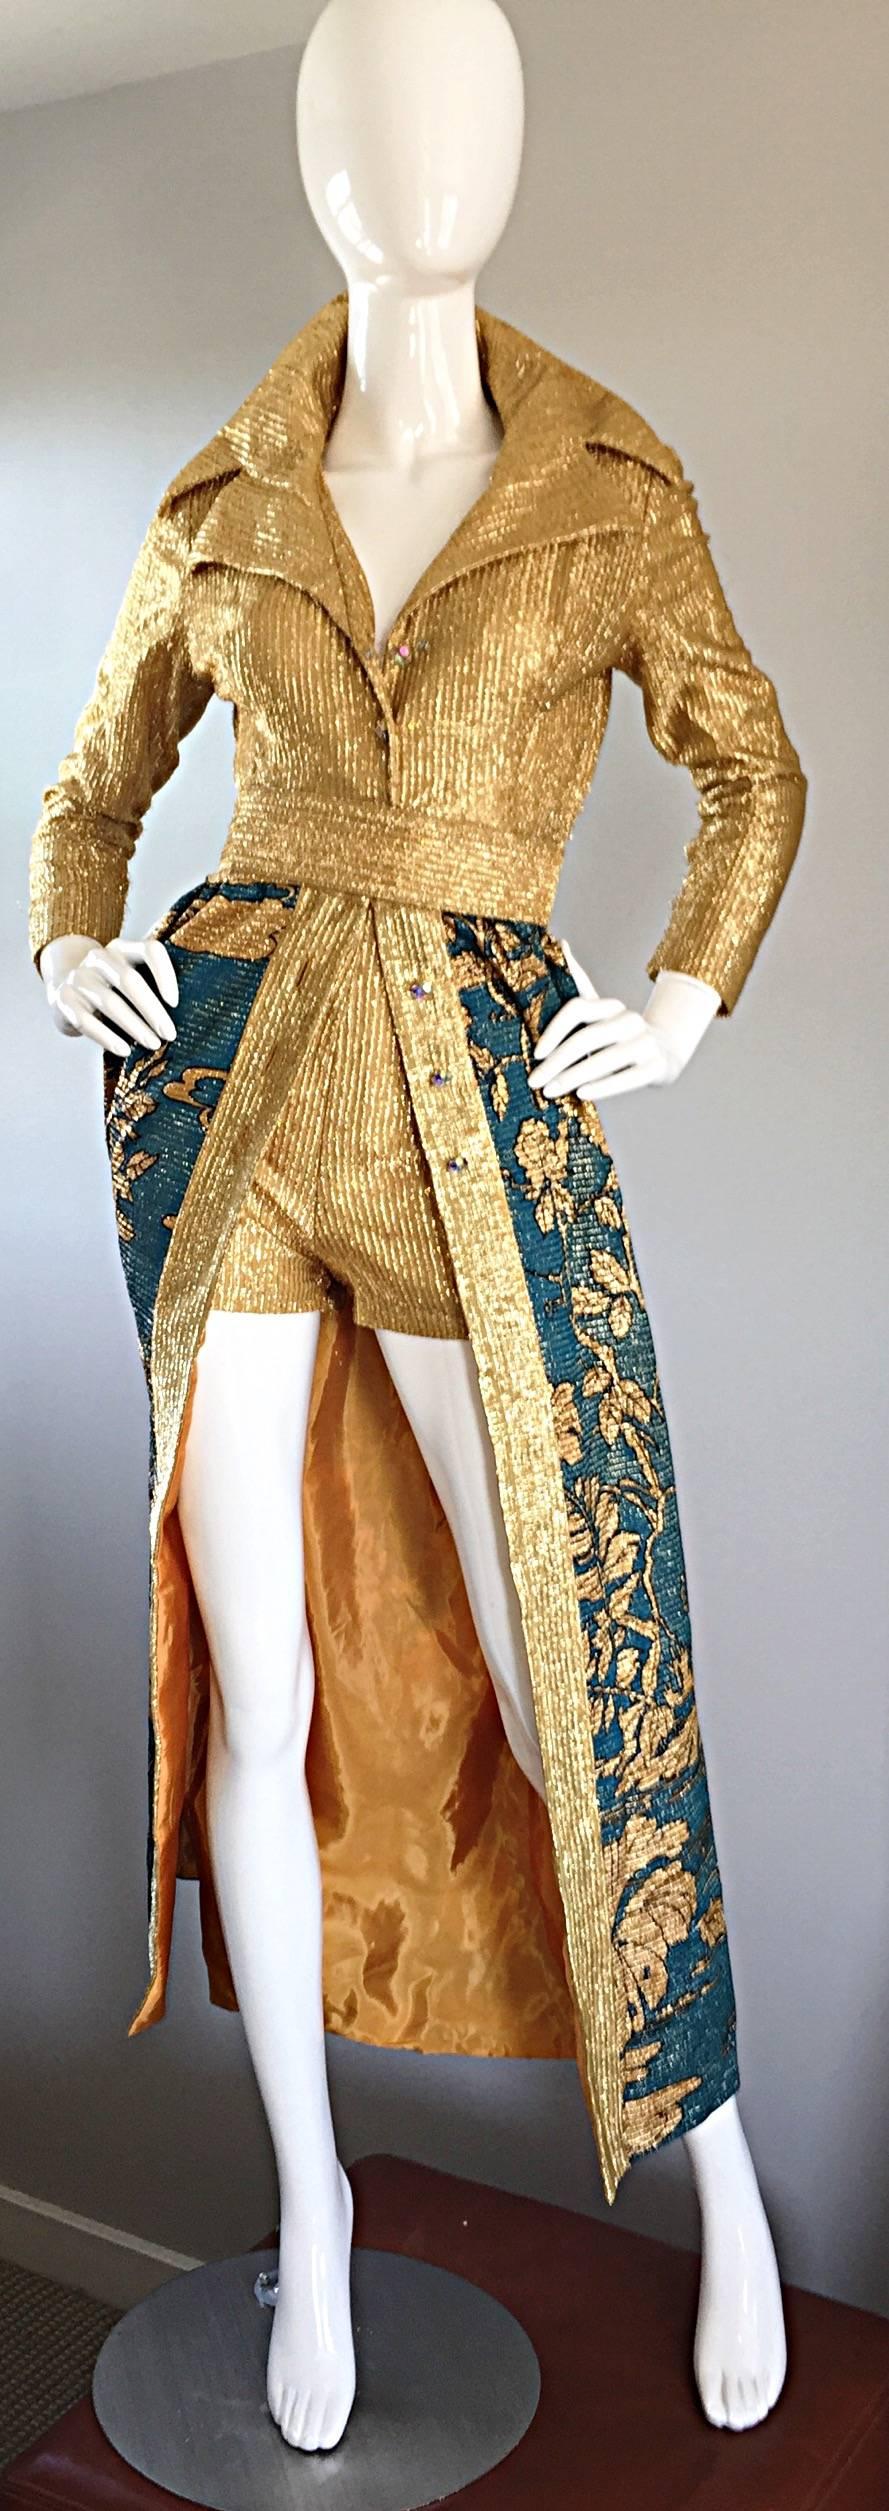 Women's Amazing Henry Higgins 1970s Vintage Dress, Hot Pants & Belt Gold + Blue Metallic